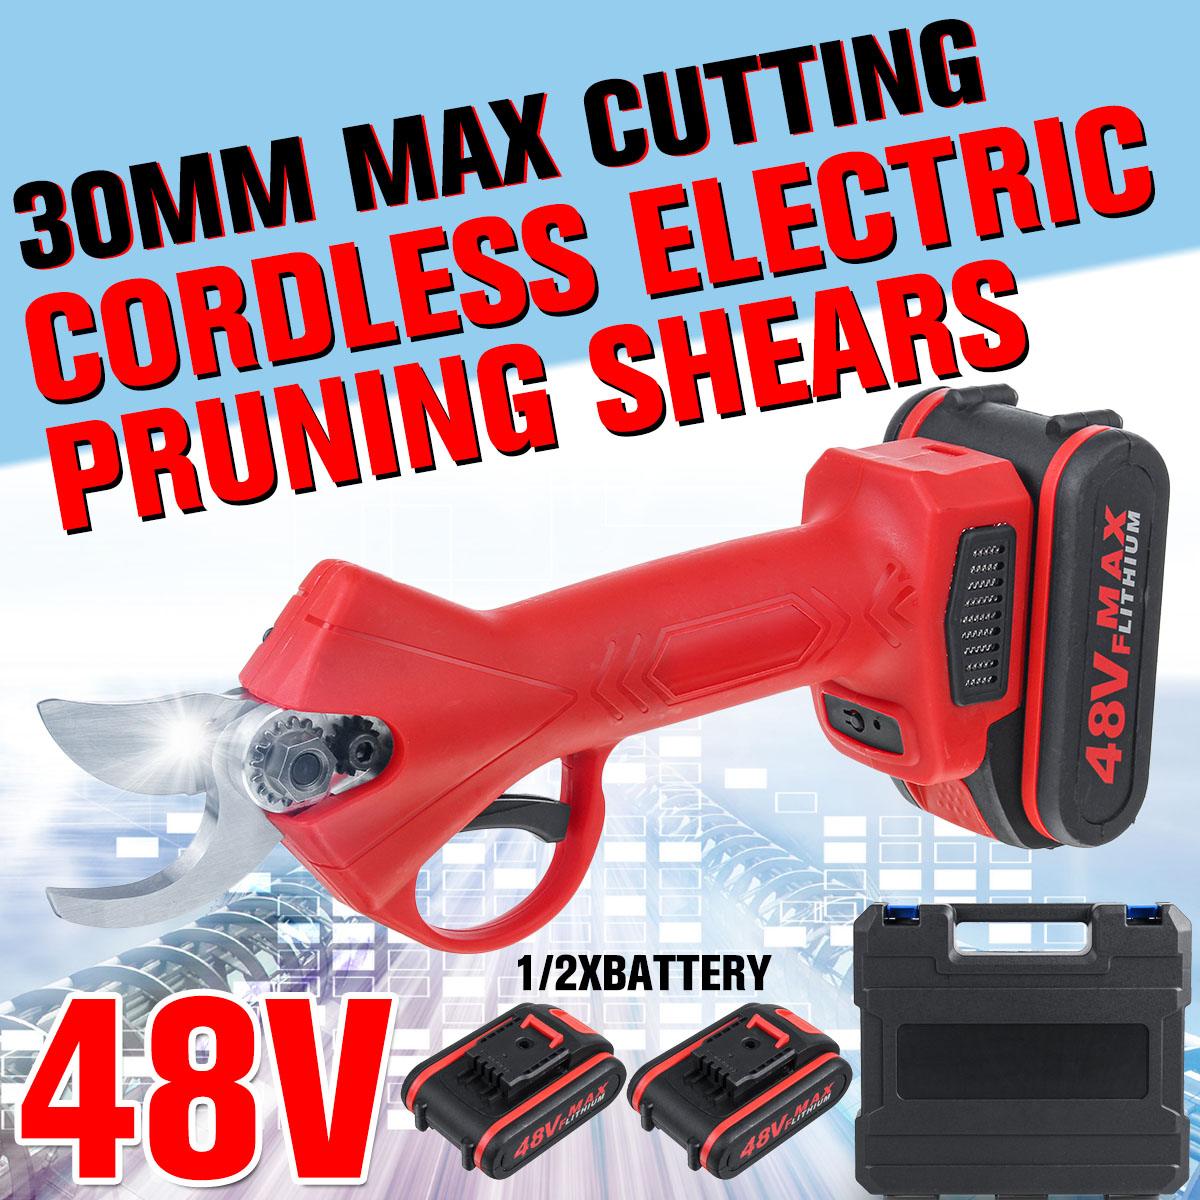 450W Cordless Electric Pruning Shears Handheld Garden Branch Shears Tools